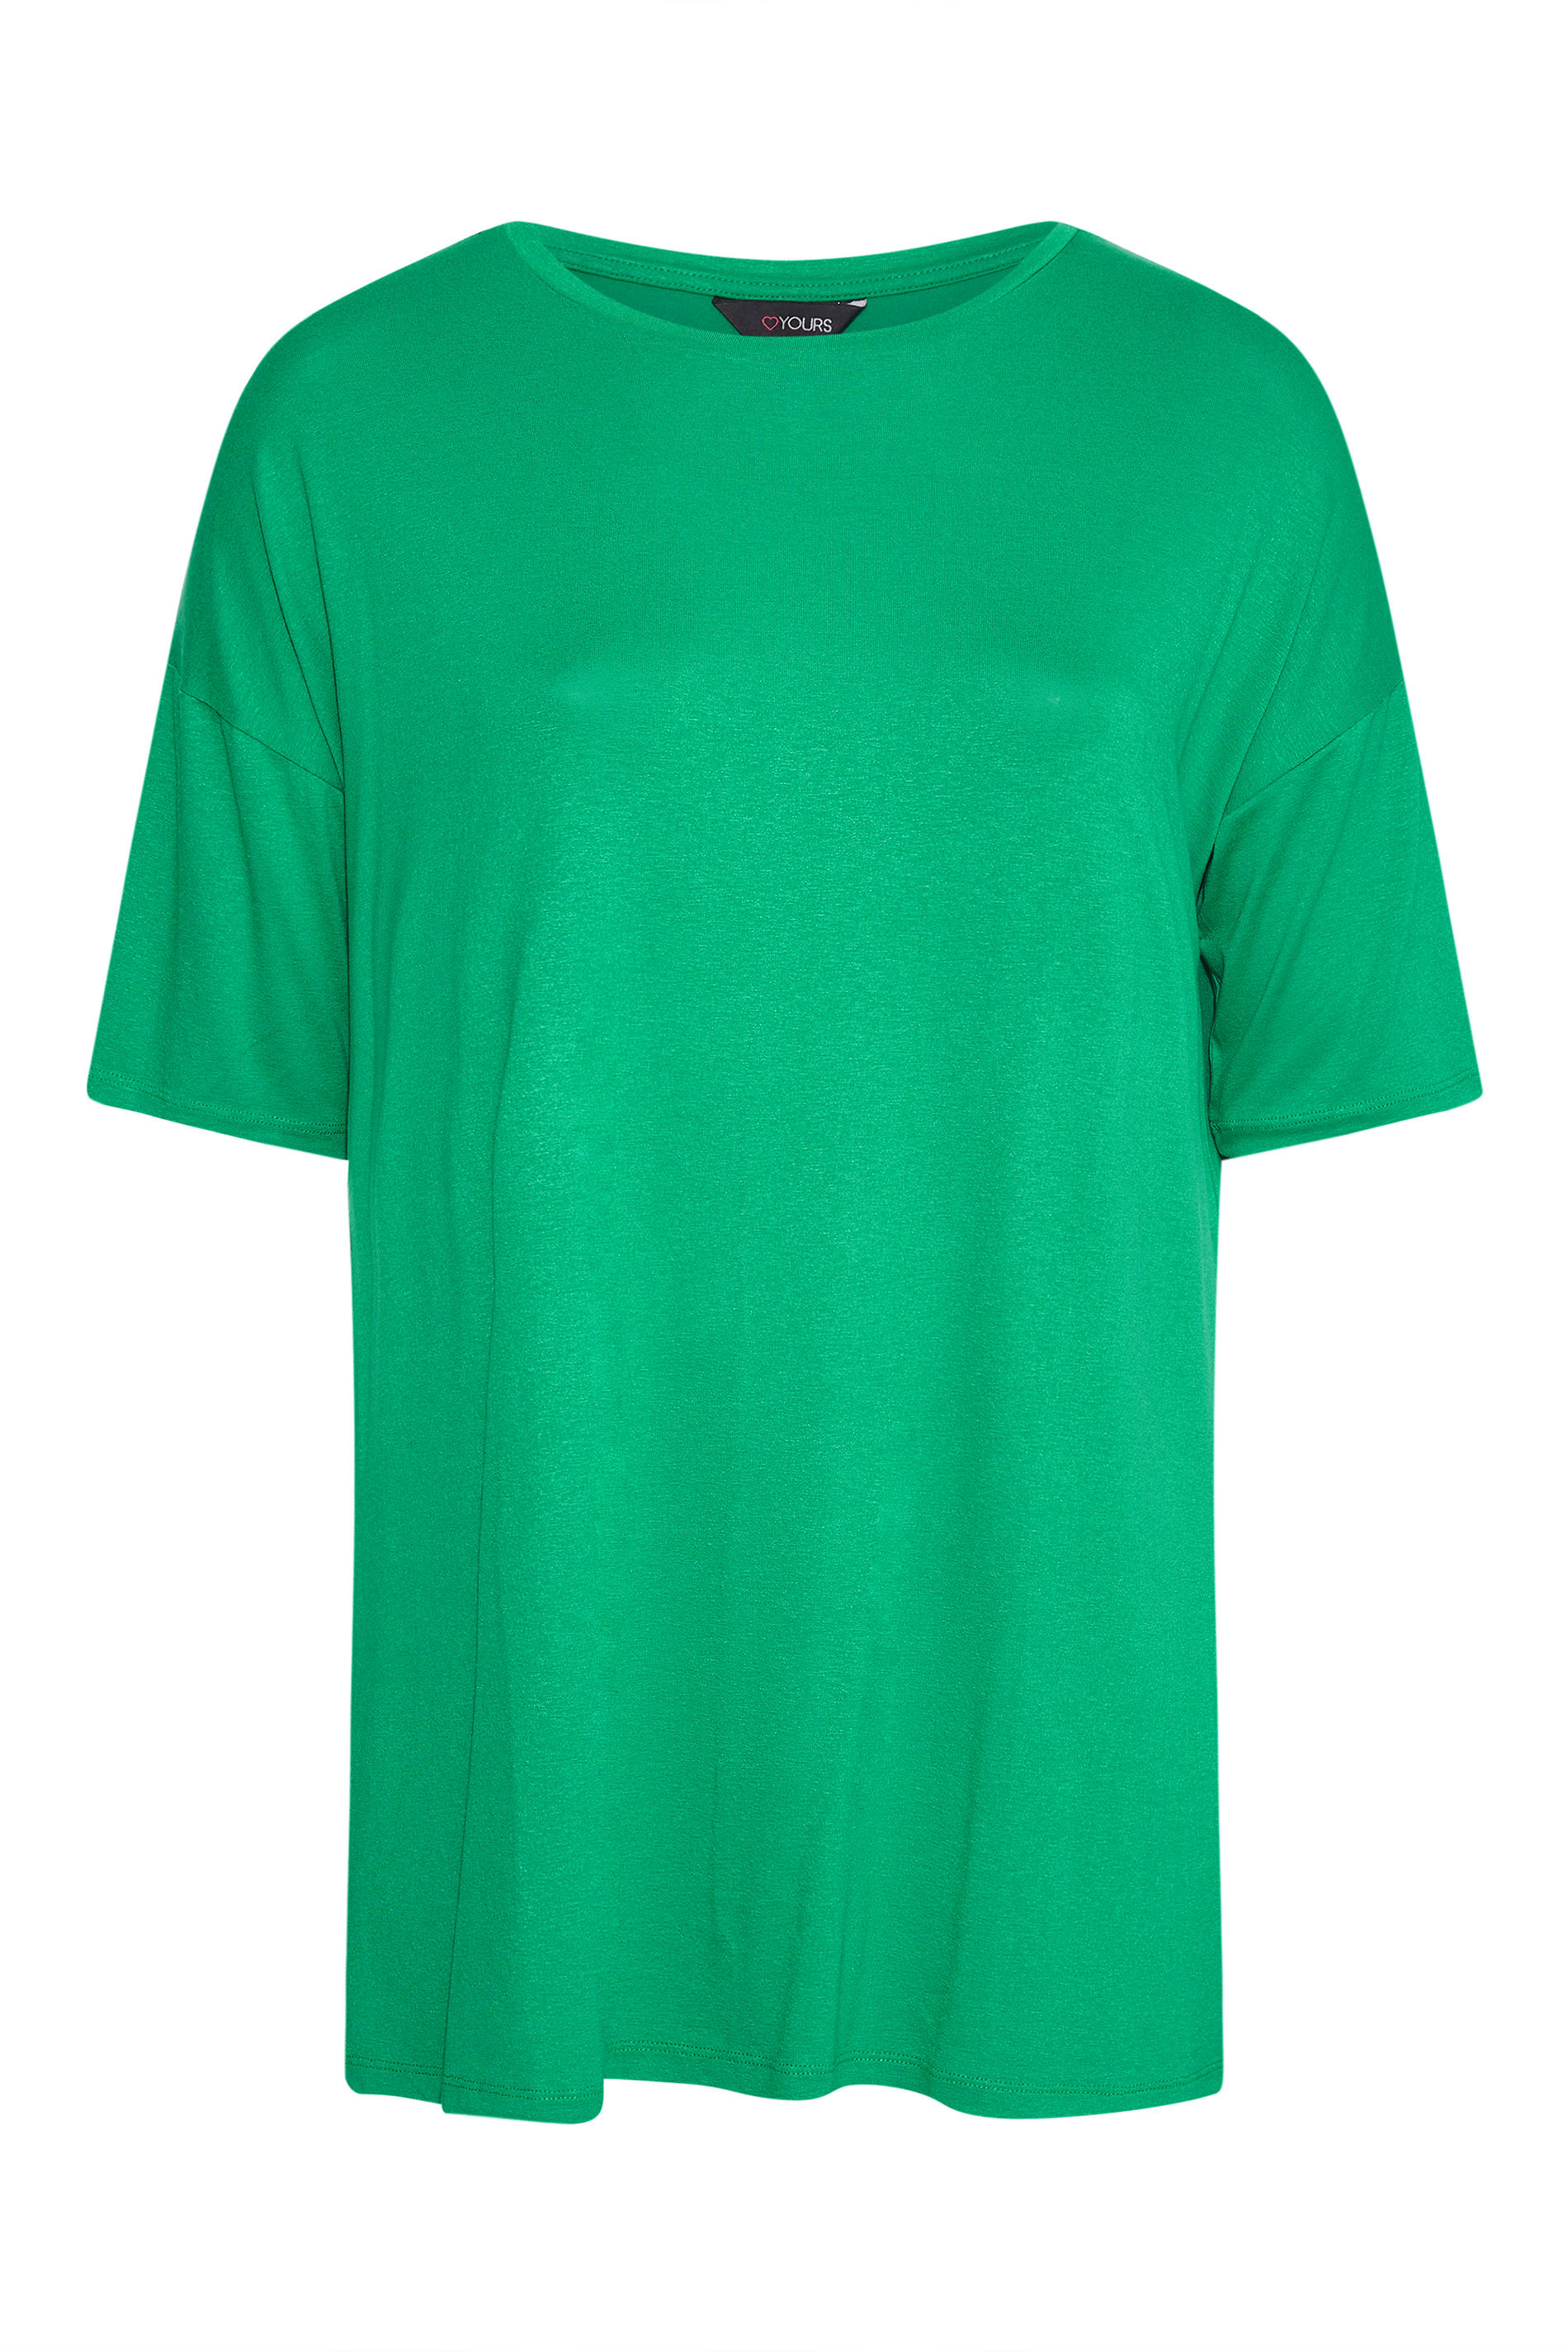 Grande taille  Tops Grande taille  T-Shirts | T-Shirt Vert Pomme Oversize en Jersey - JO57370